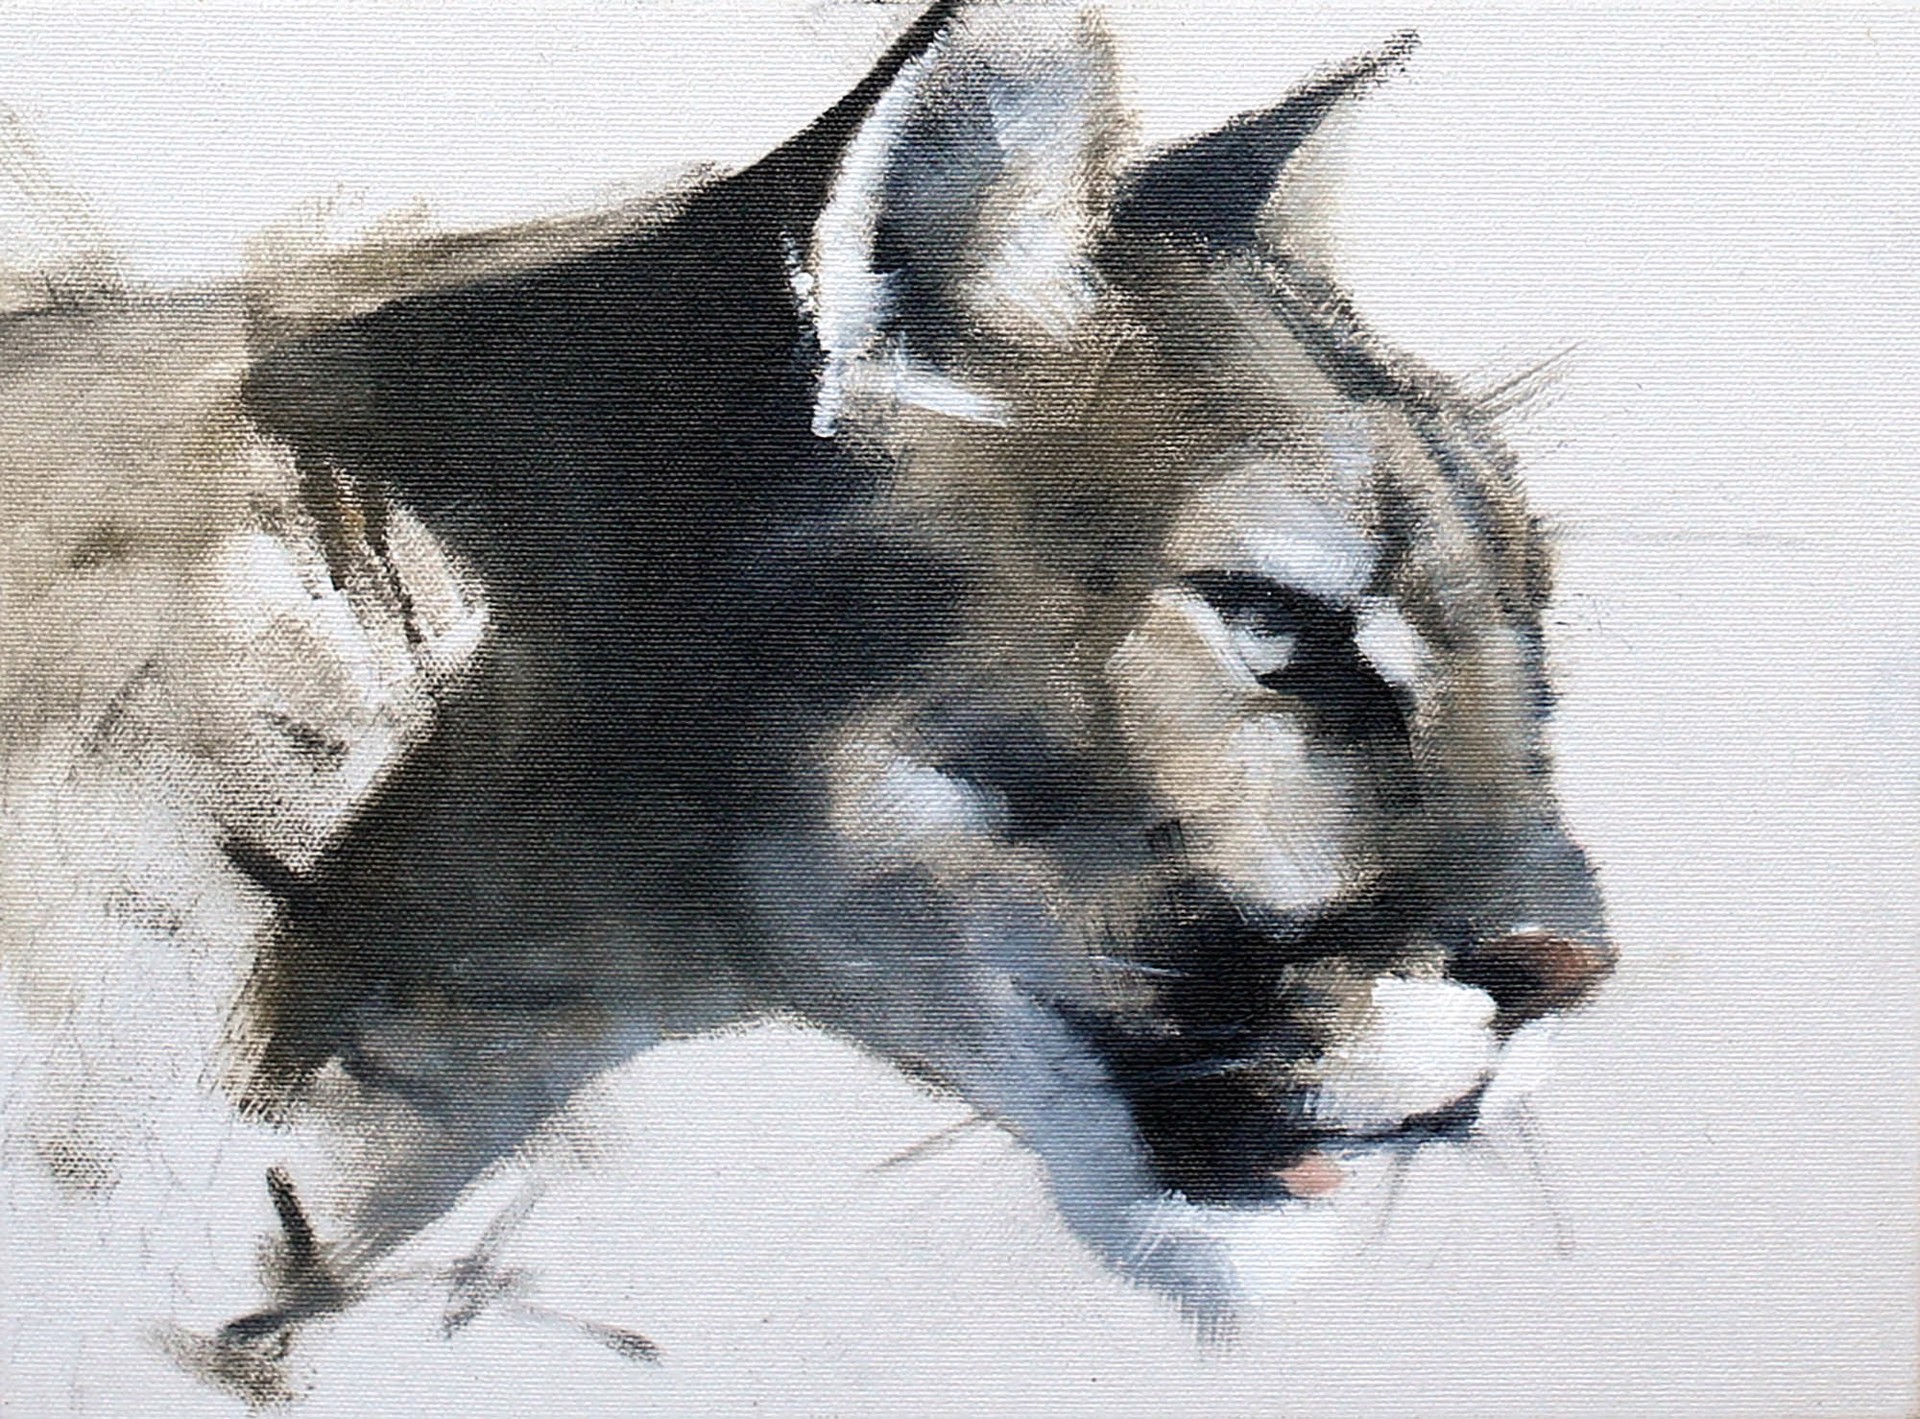 Cougar Study by Doyle Hostetler